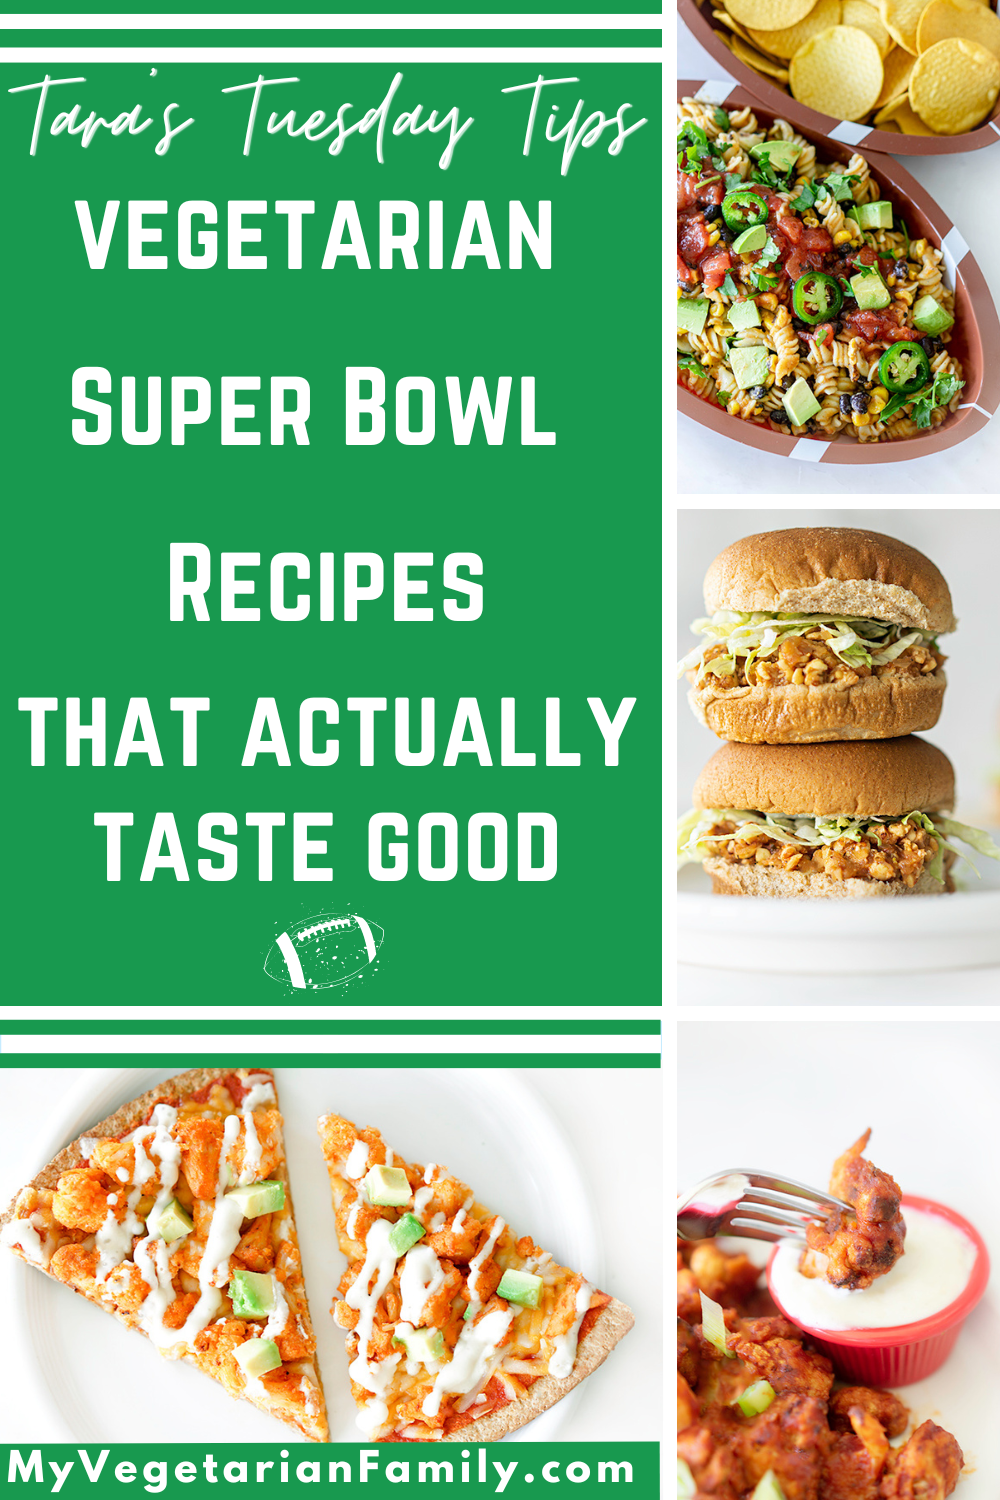 Vegetarian Super Bolw Recipes that Actually taste Good | Tara's Tuesday Tips | My Vegetarian Family #vegetariansuperbowl